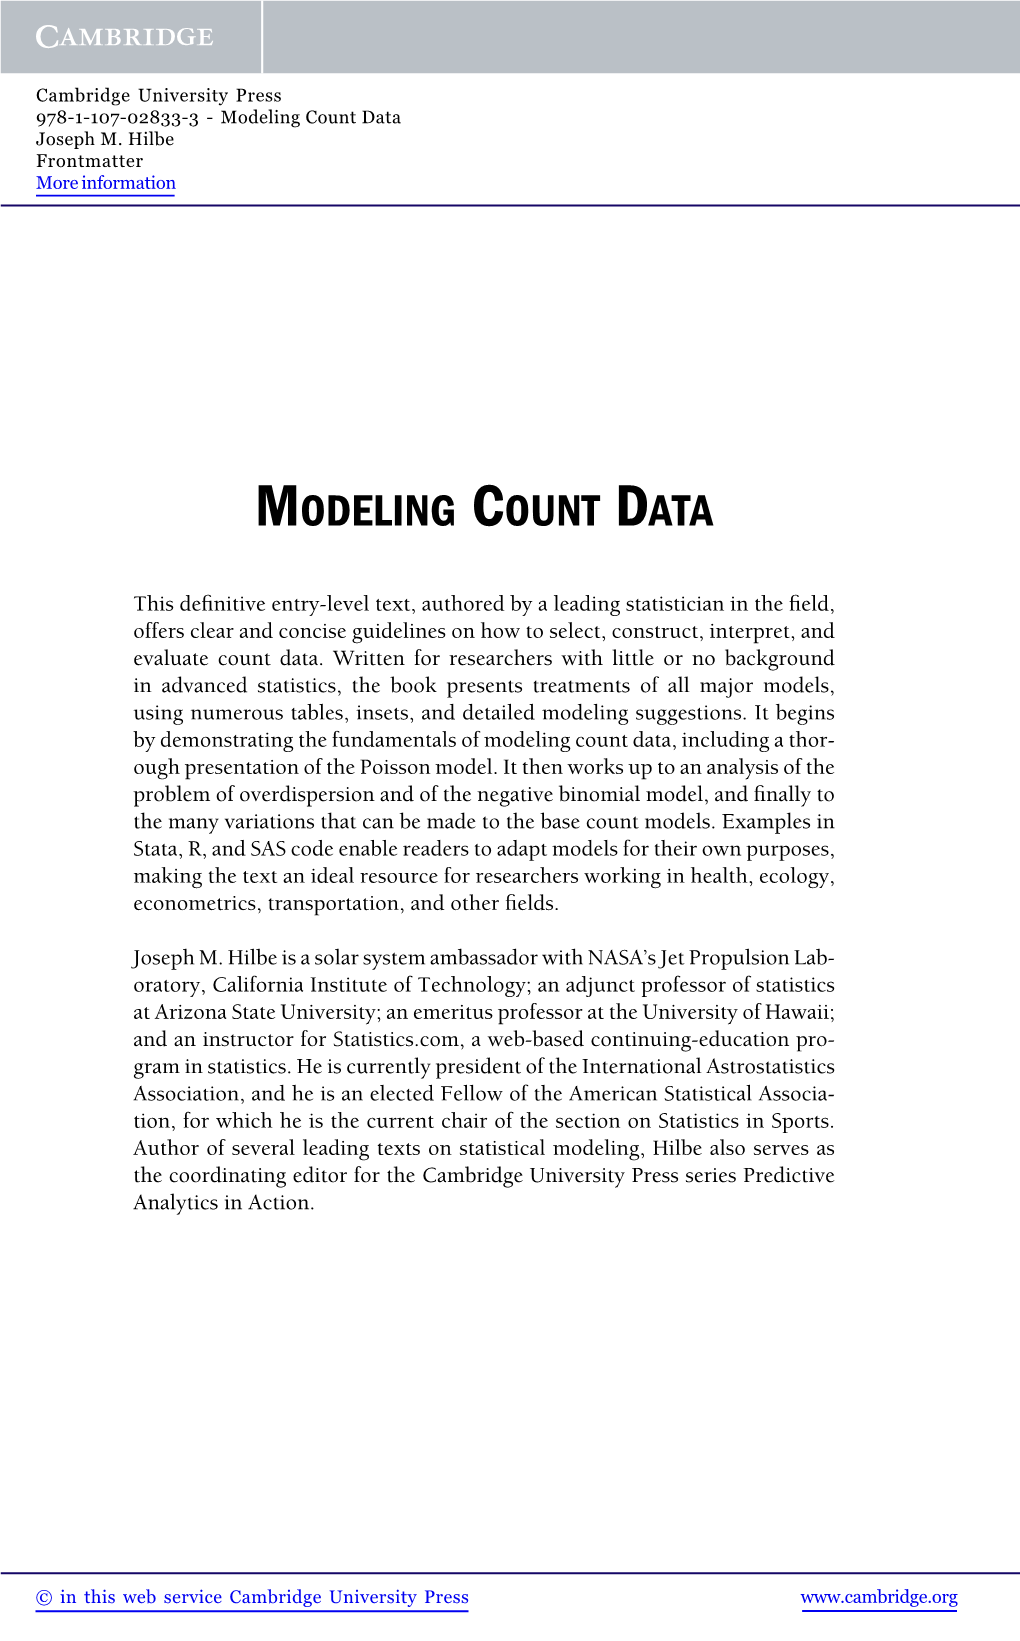 Modeling Count Data Joseph M. Hilbe Frontmatter More Information